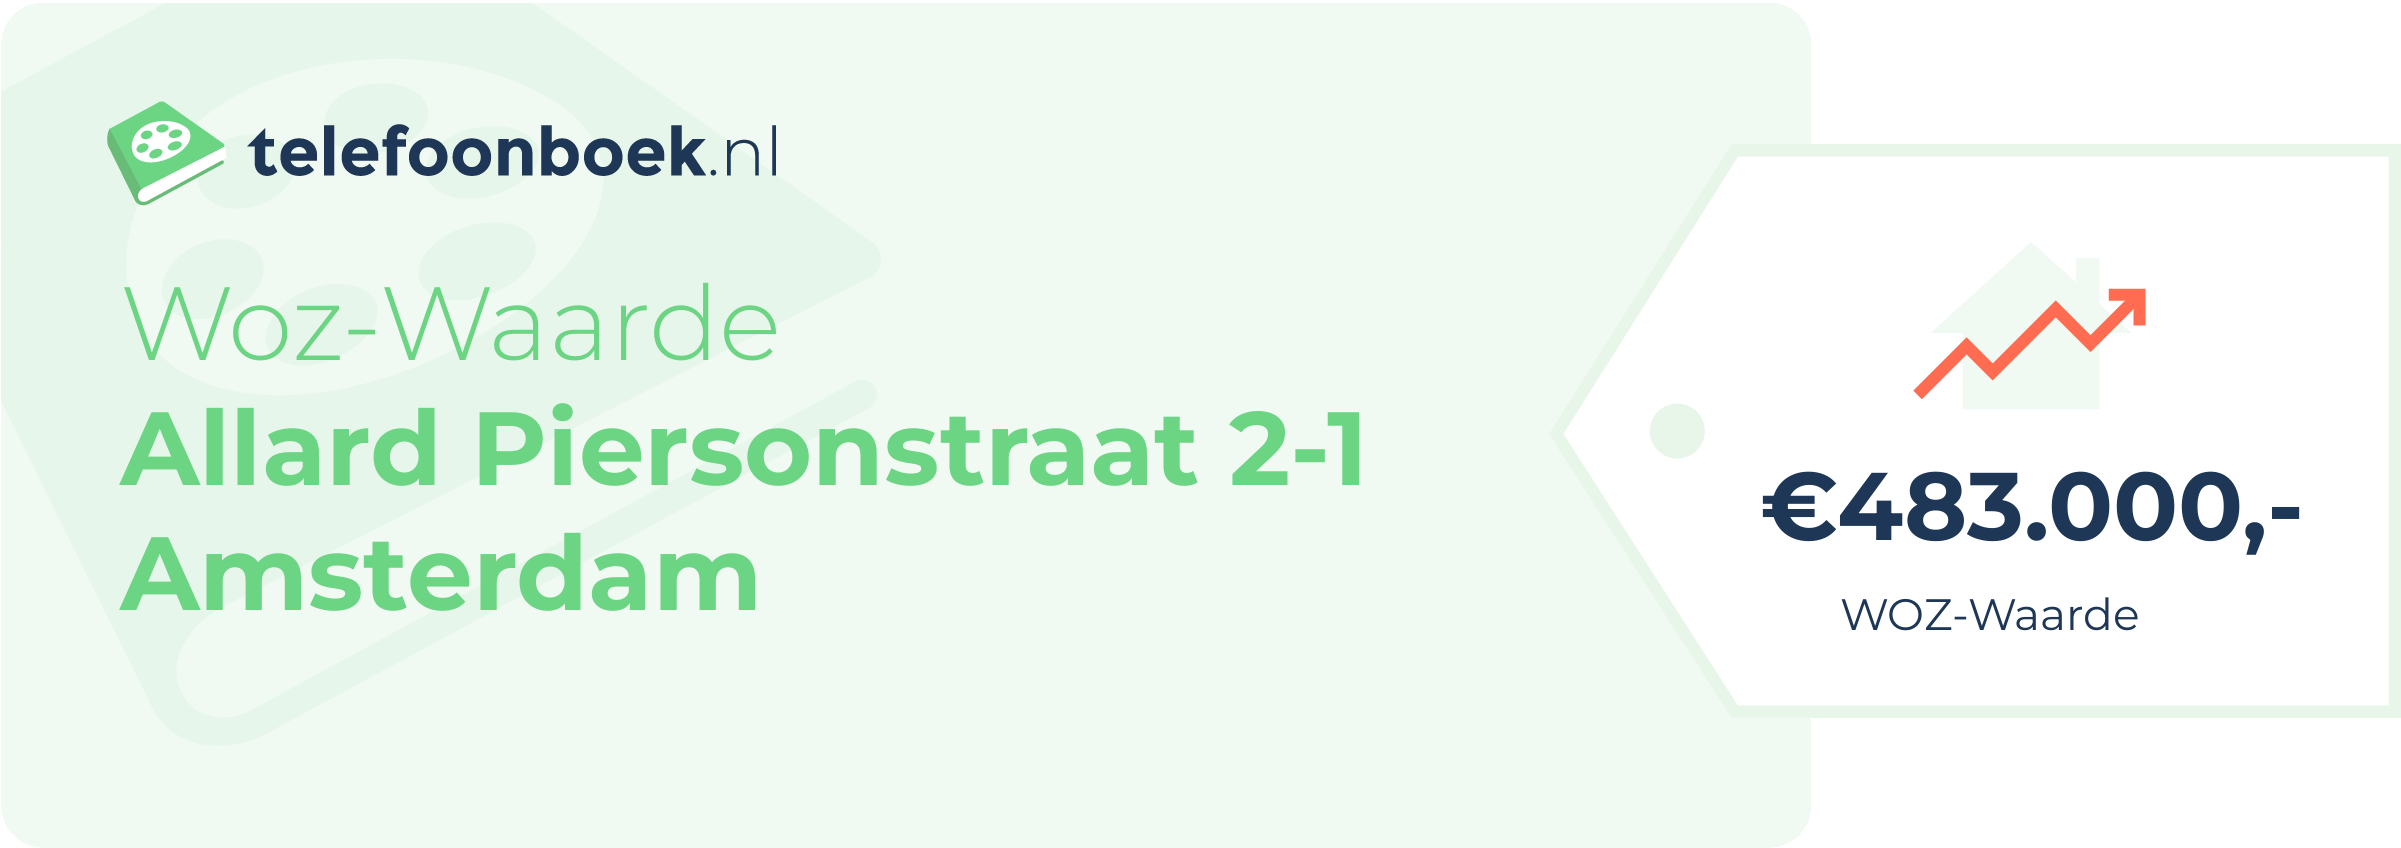 WOZ-waarde Allard Piersonstraat 2-1 Amsterdam